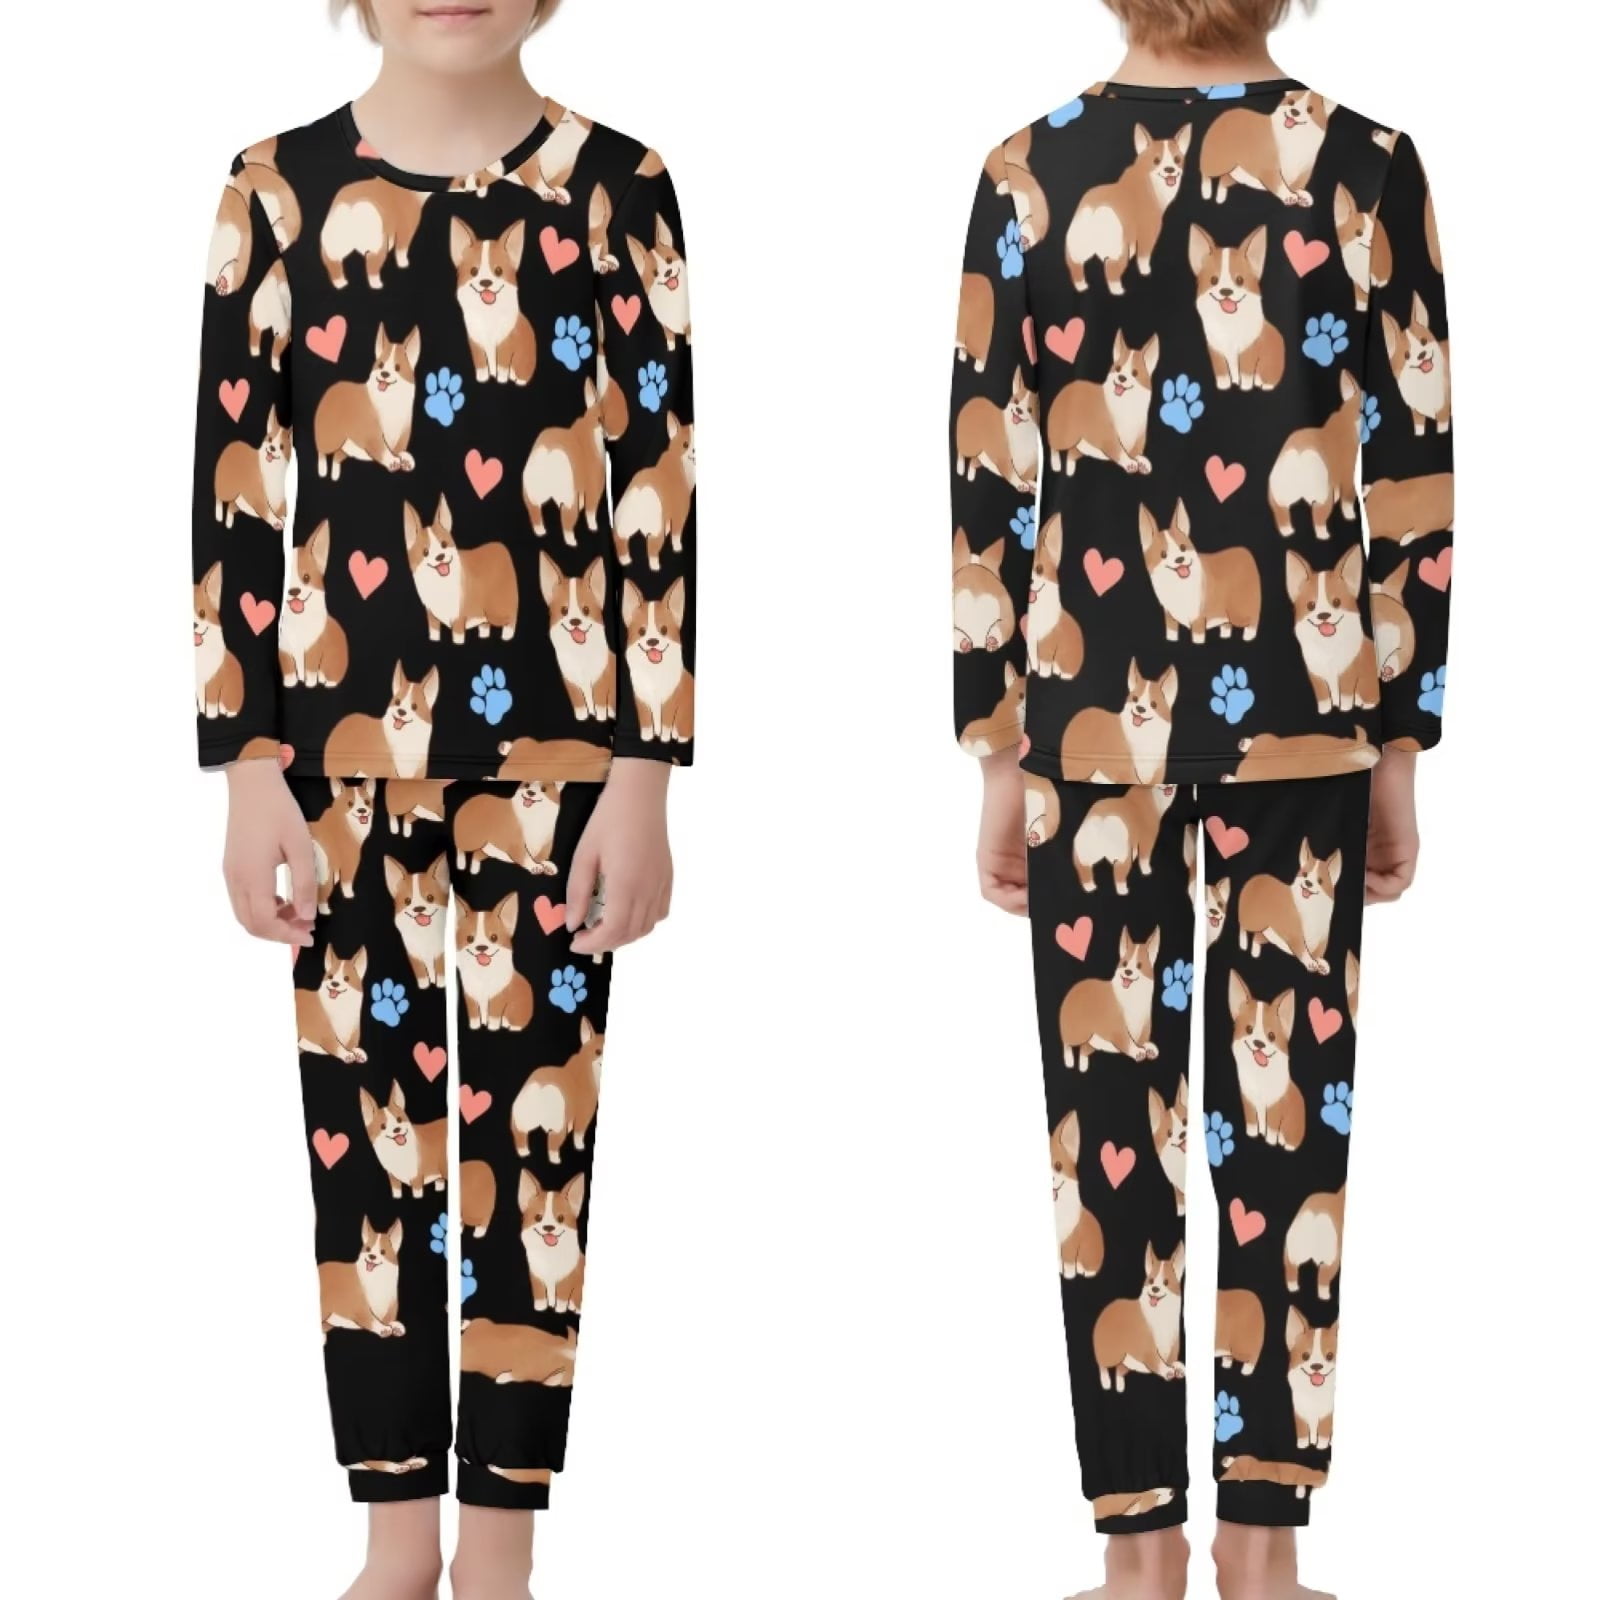 Renewold Loose Fit Women Sleepwear Nightgown Pajama Lingerie,Cute Corgi  Size XS Fall Winter Outfits with Pockets Skin Friendly Long Sleeve Top 